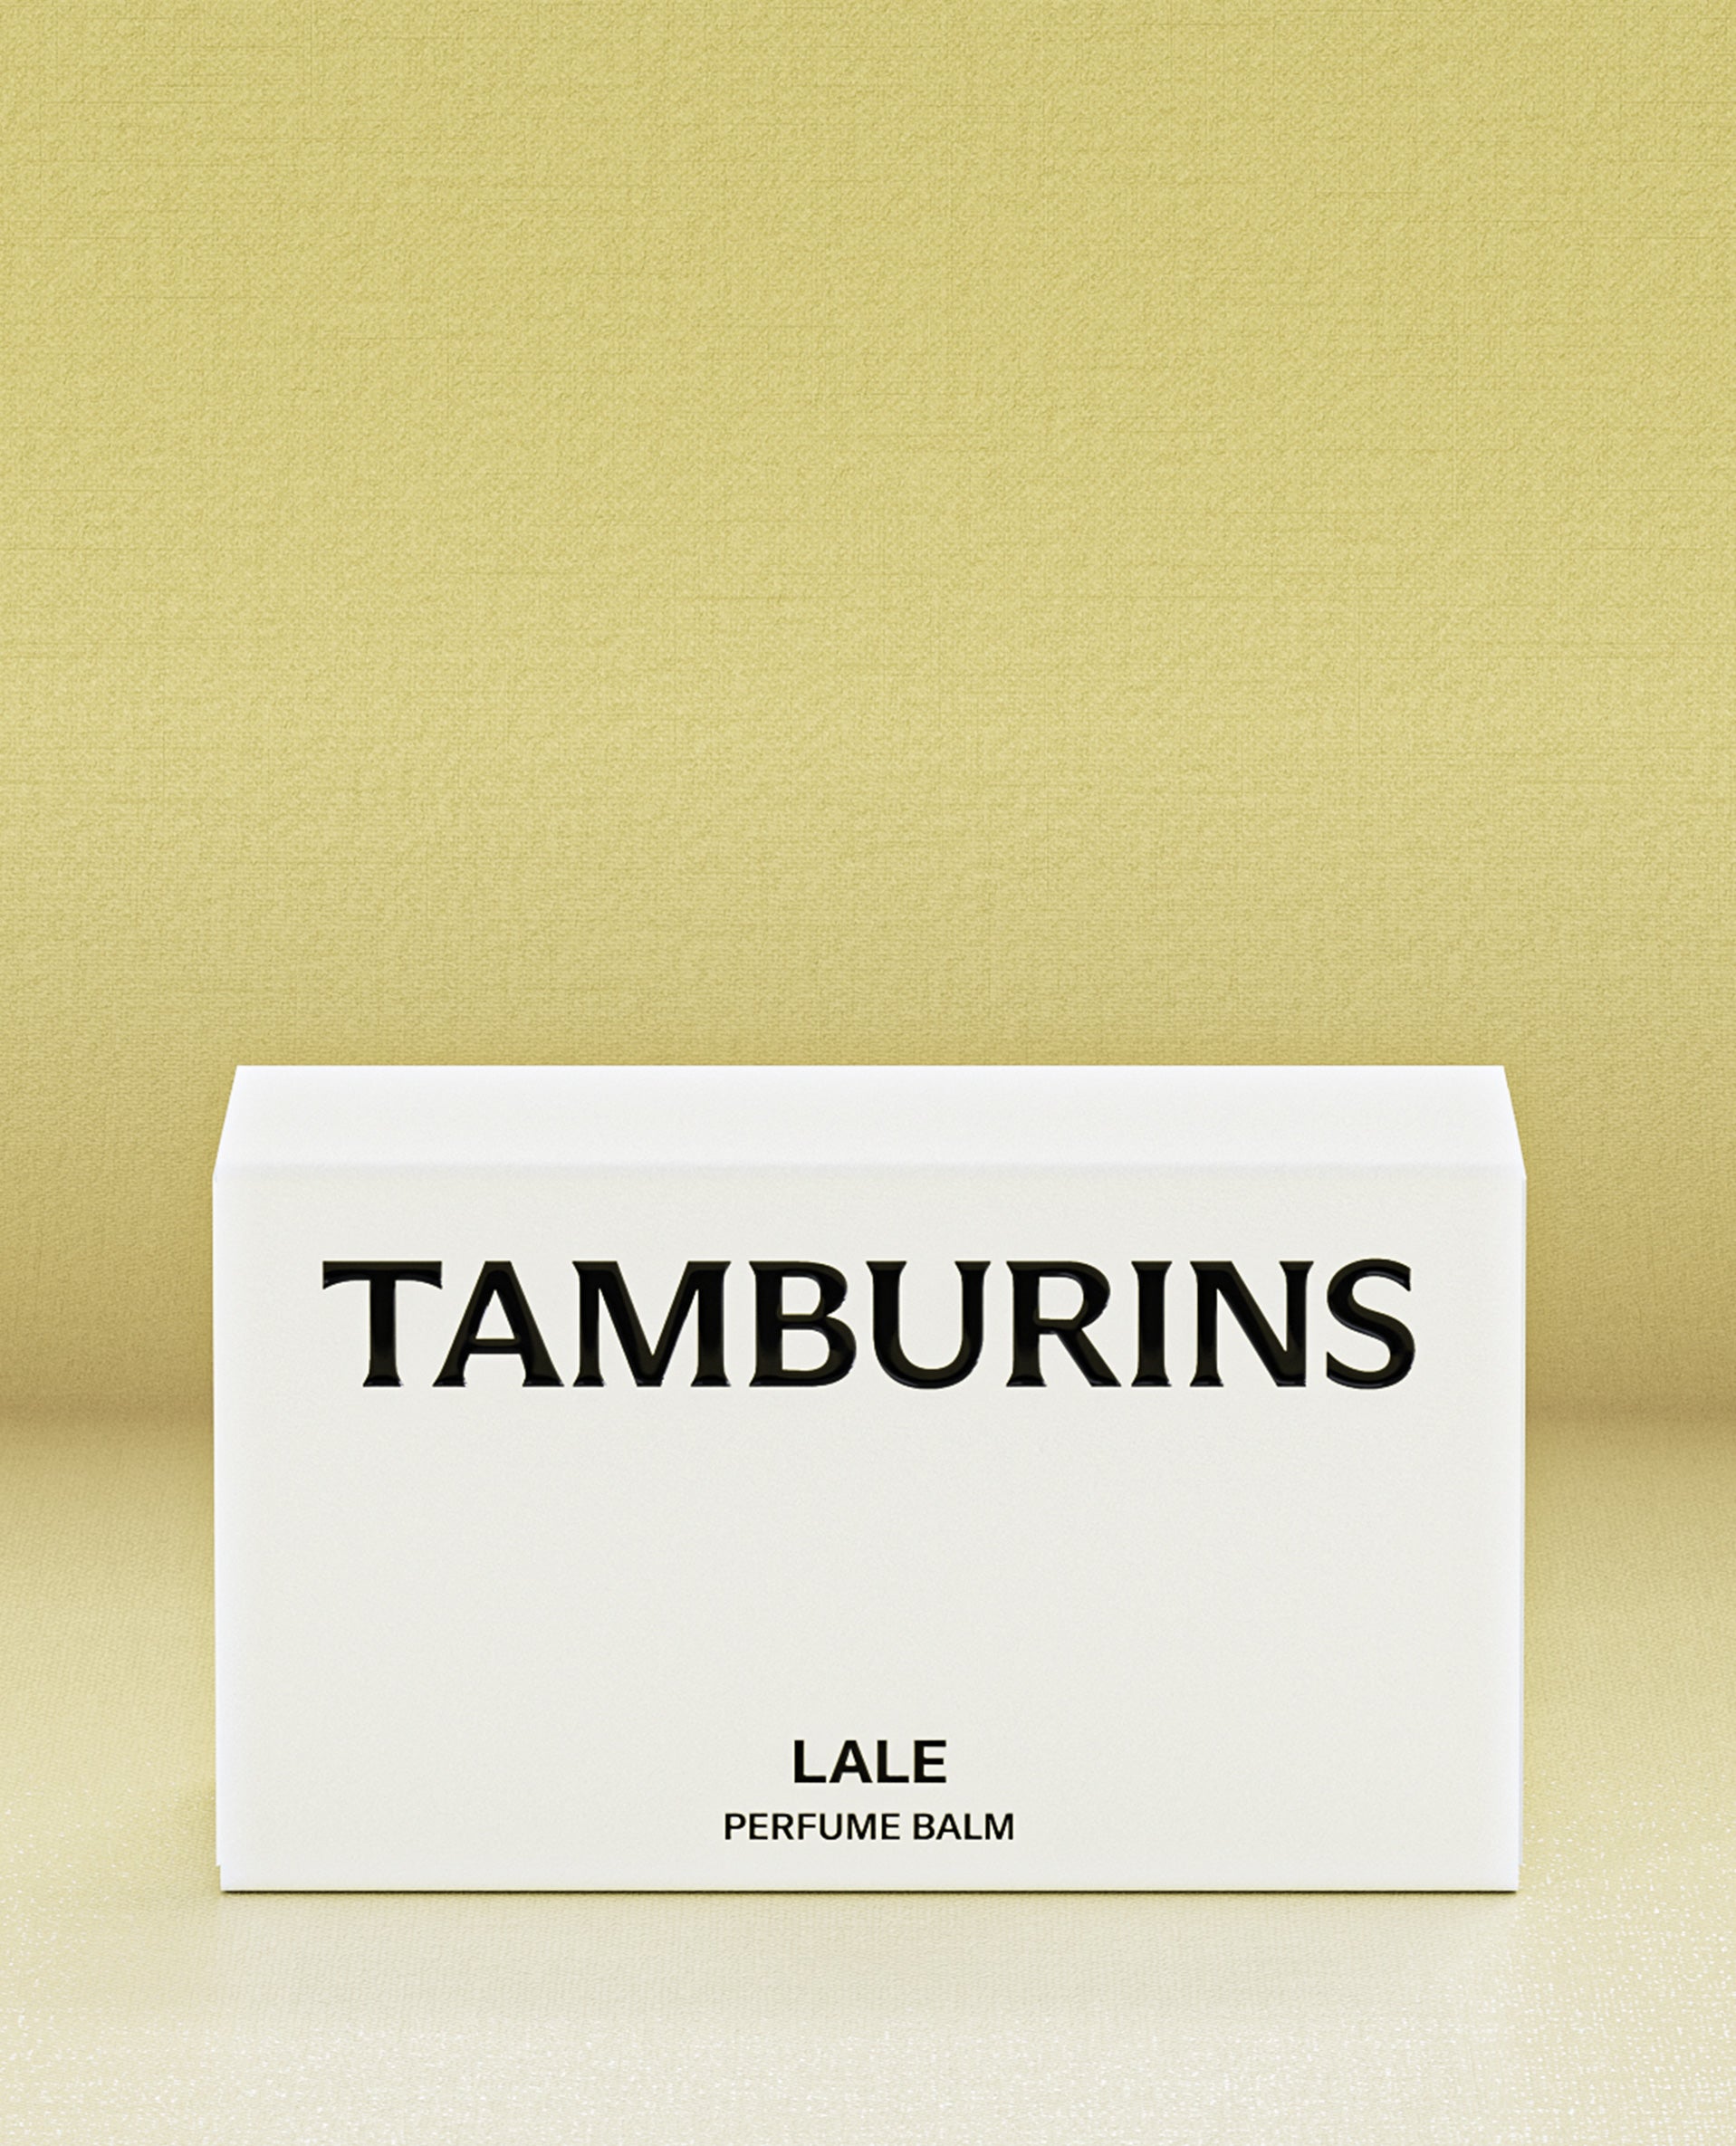 TAMBURINS Perfume Balm LALE 6.5g